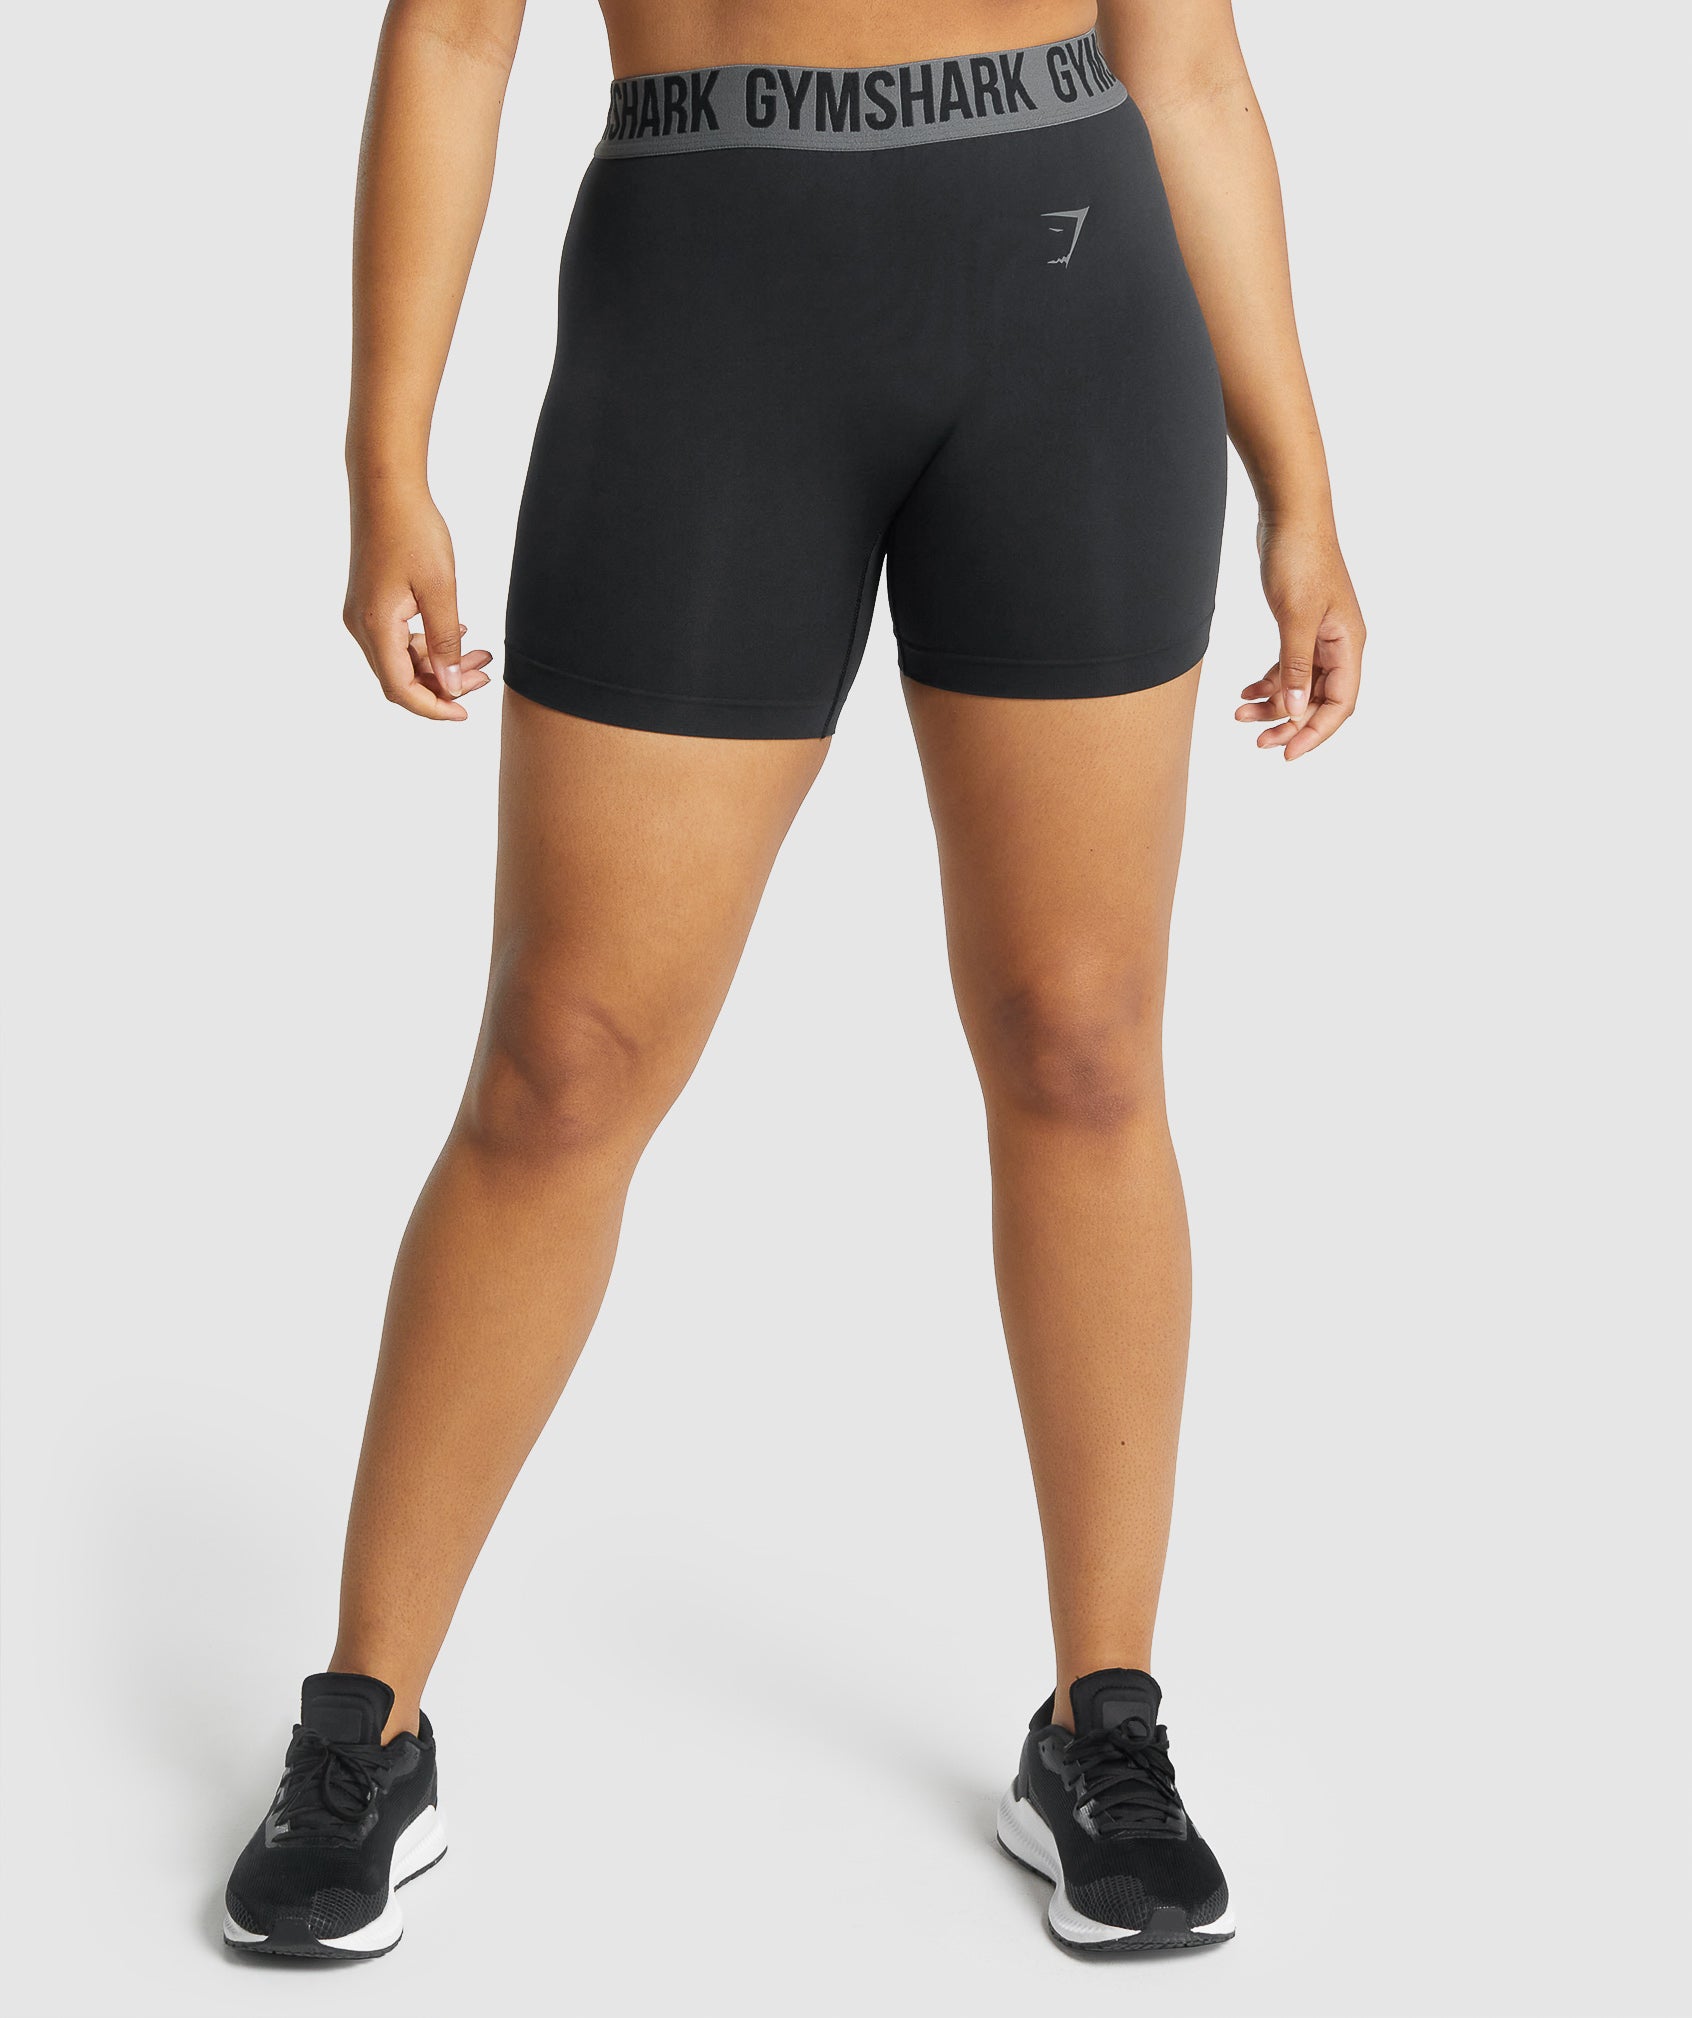 Gymshark Fit Seamless Shorts - Black